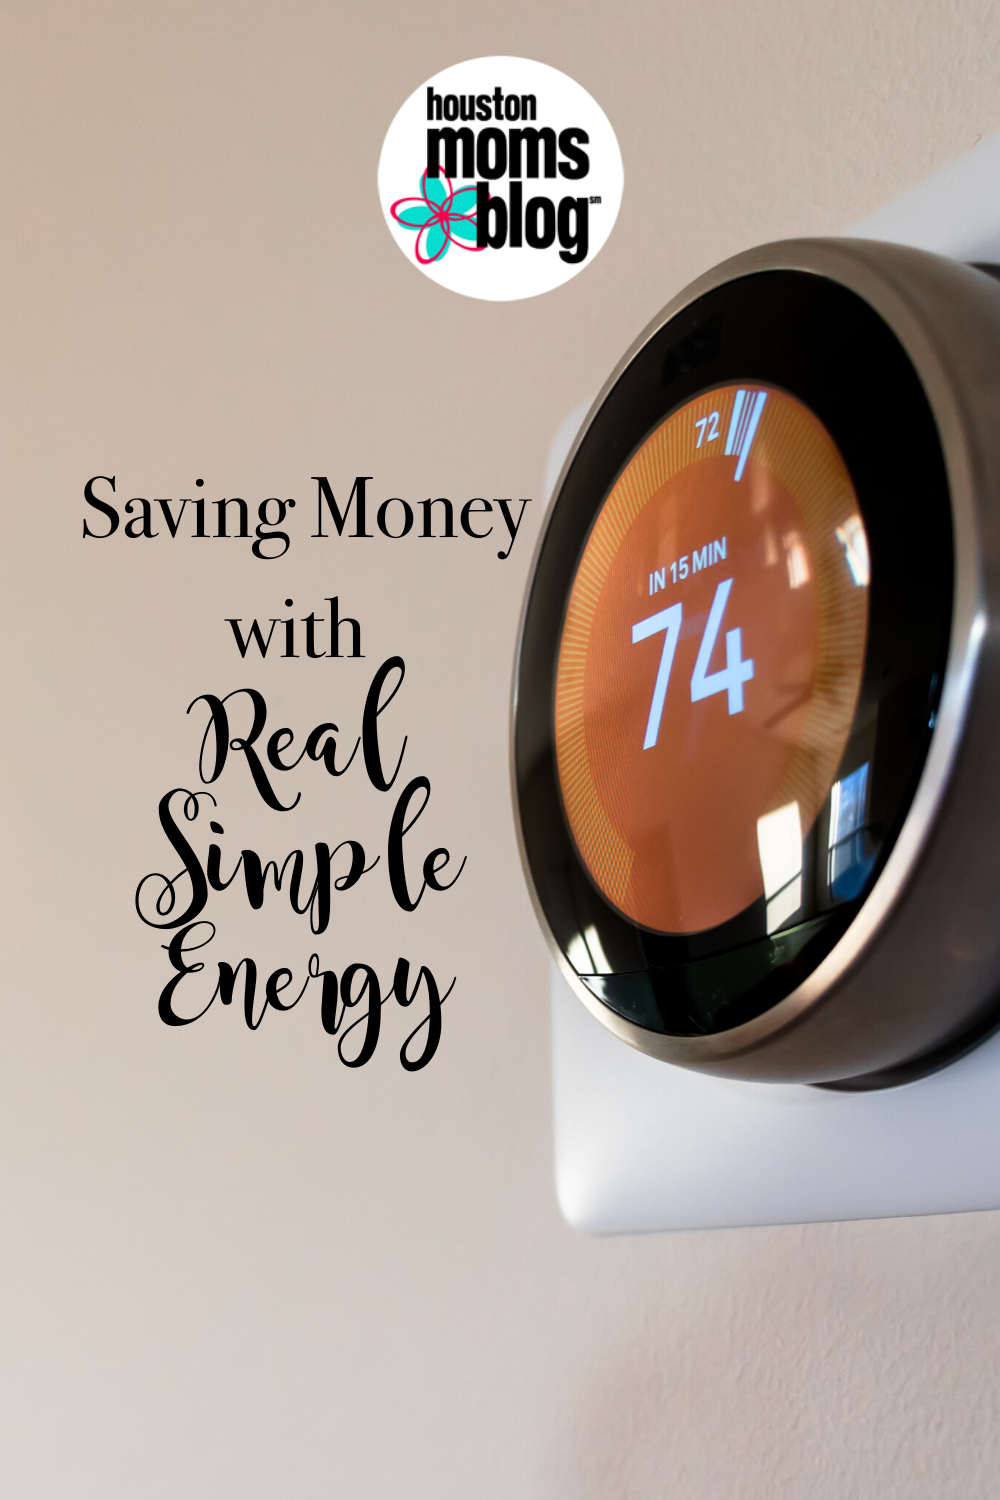 Houston Moms Blog "Saving Money with Real Simple Energy" #houstonmomsblog #momsaroundhouston